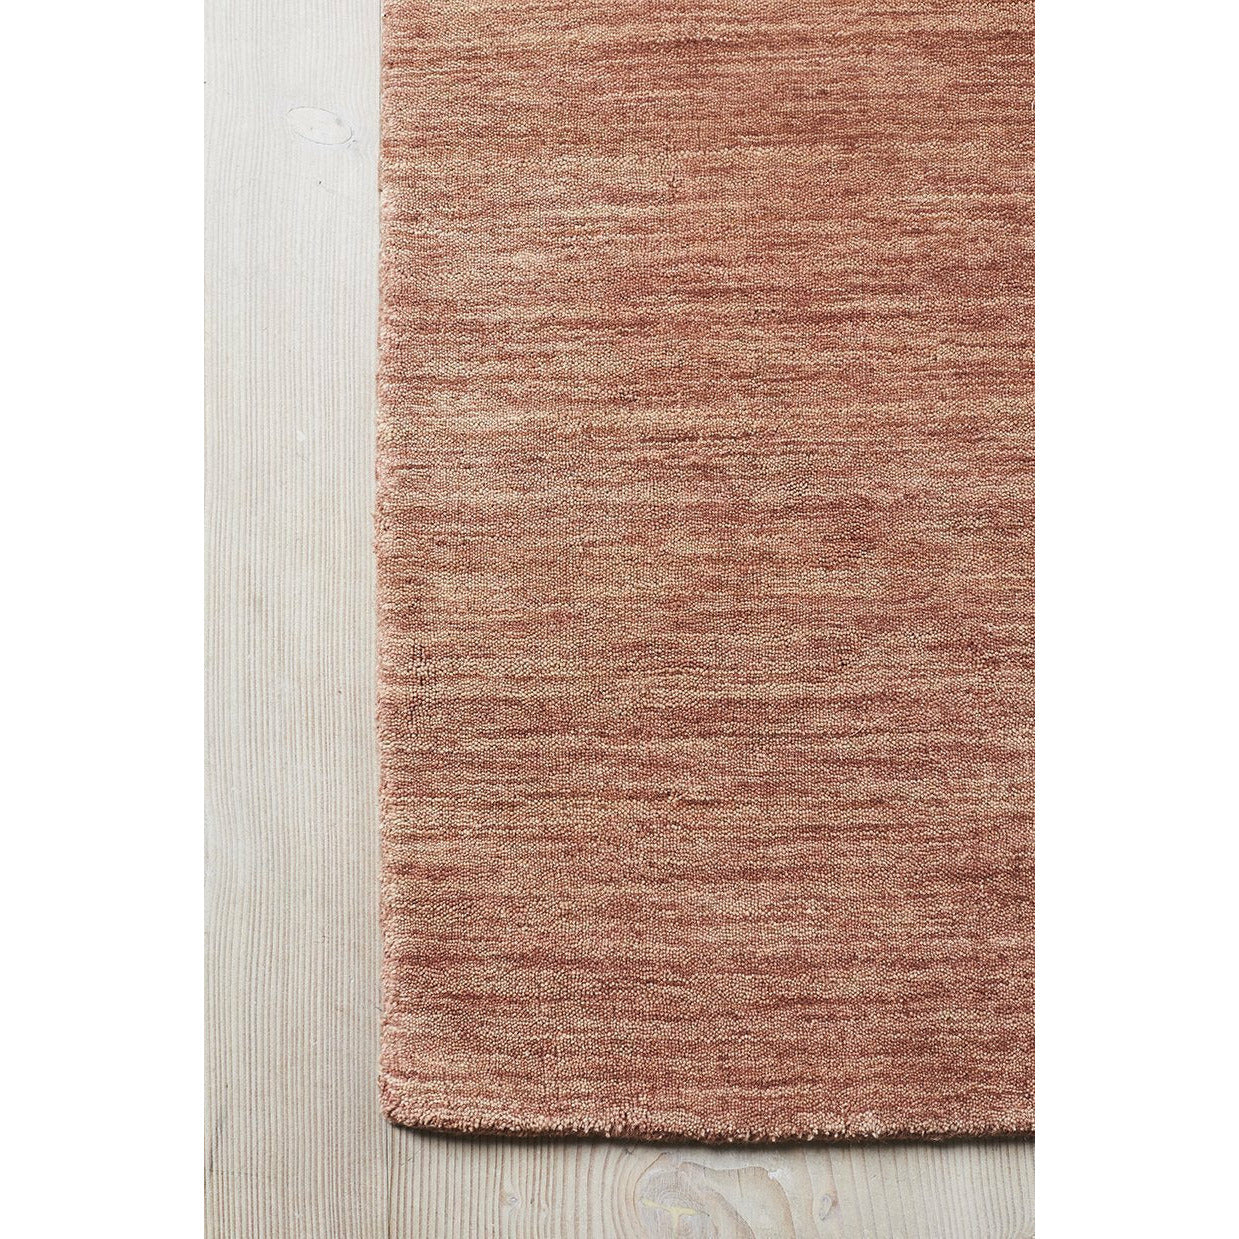 Crema de café de la alfombra de Massimo Earth, 140x200 cm